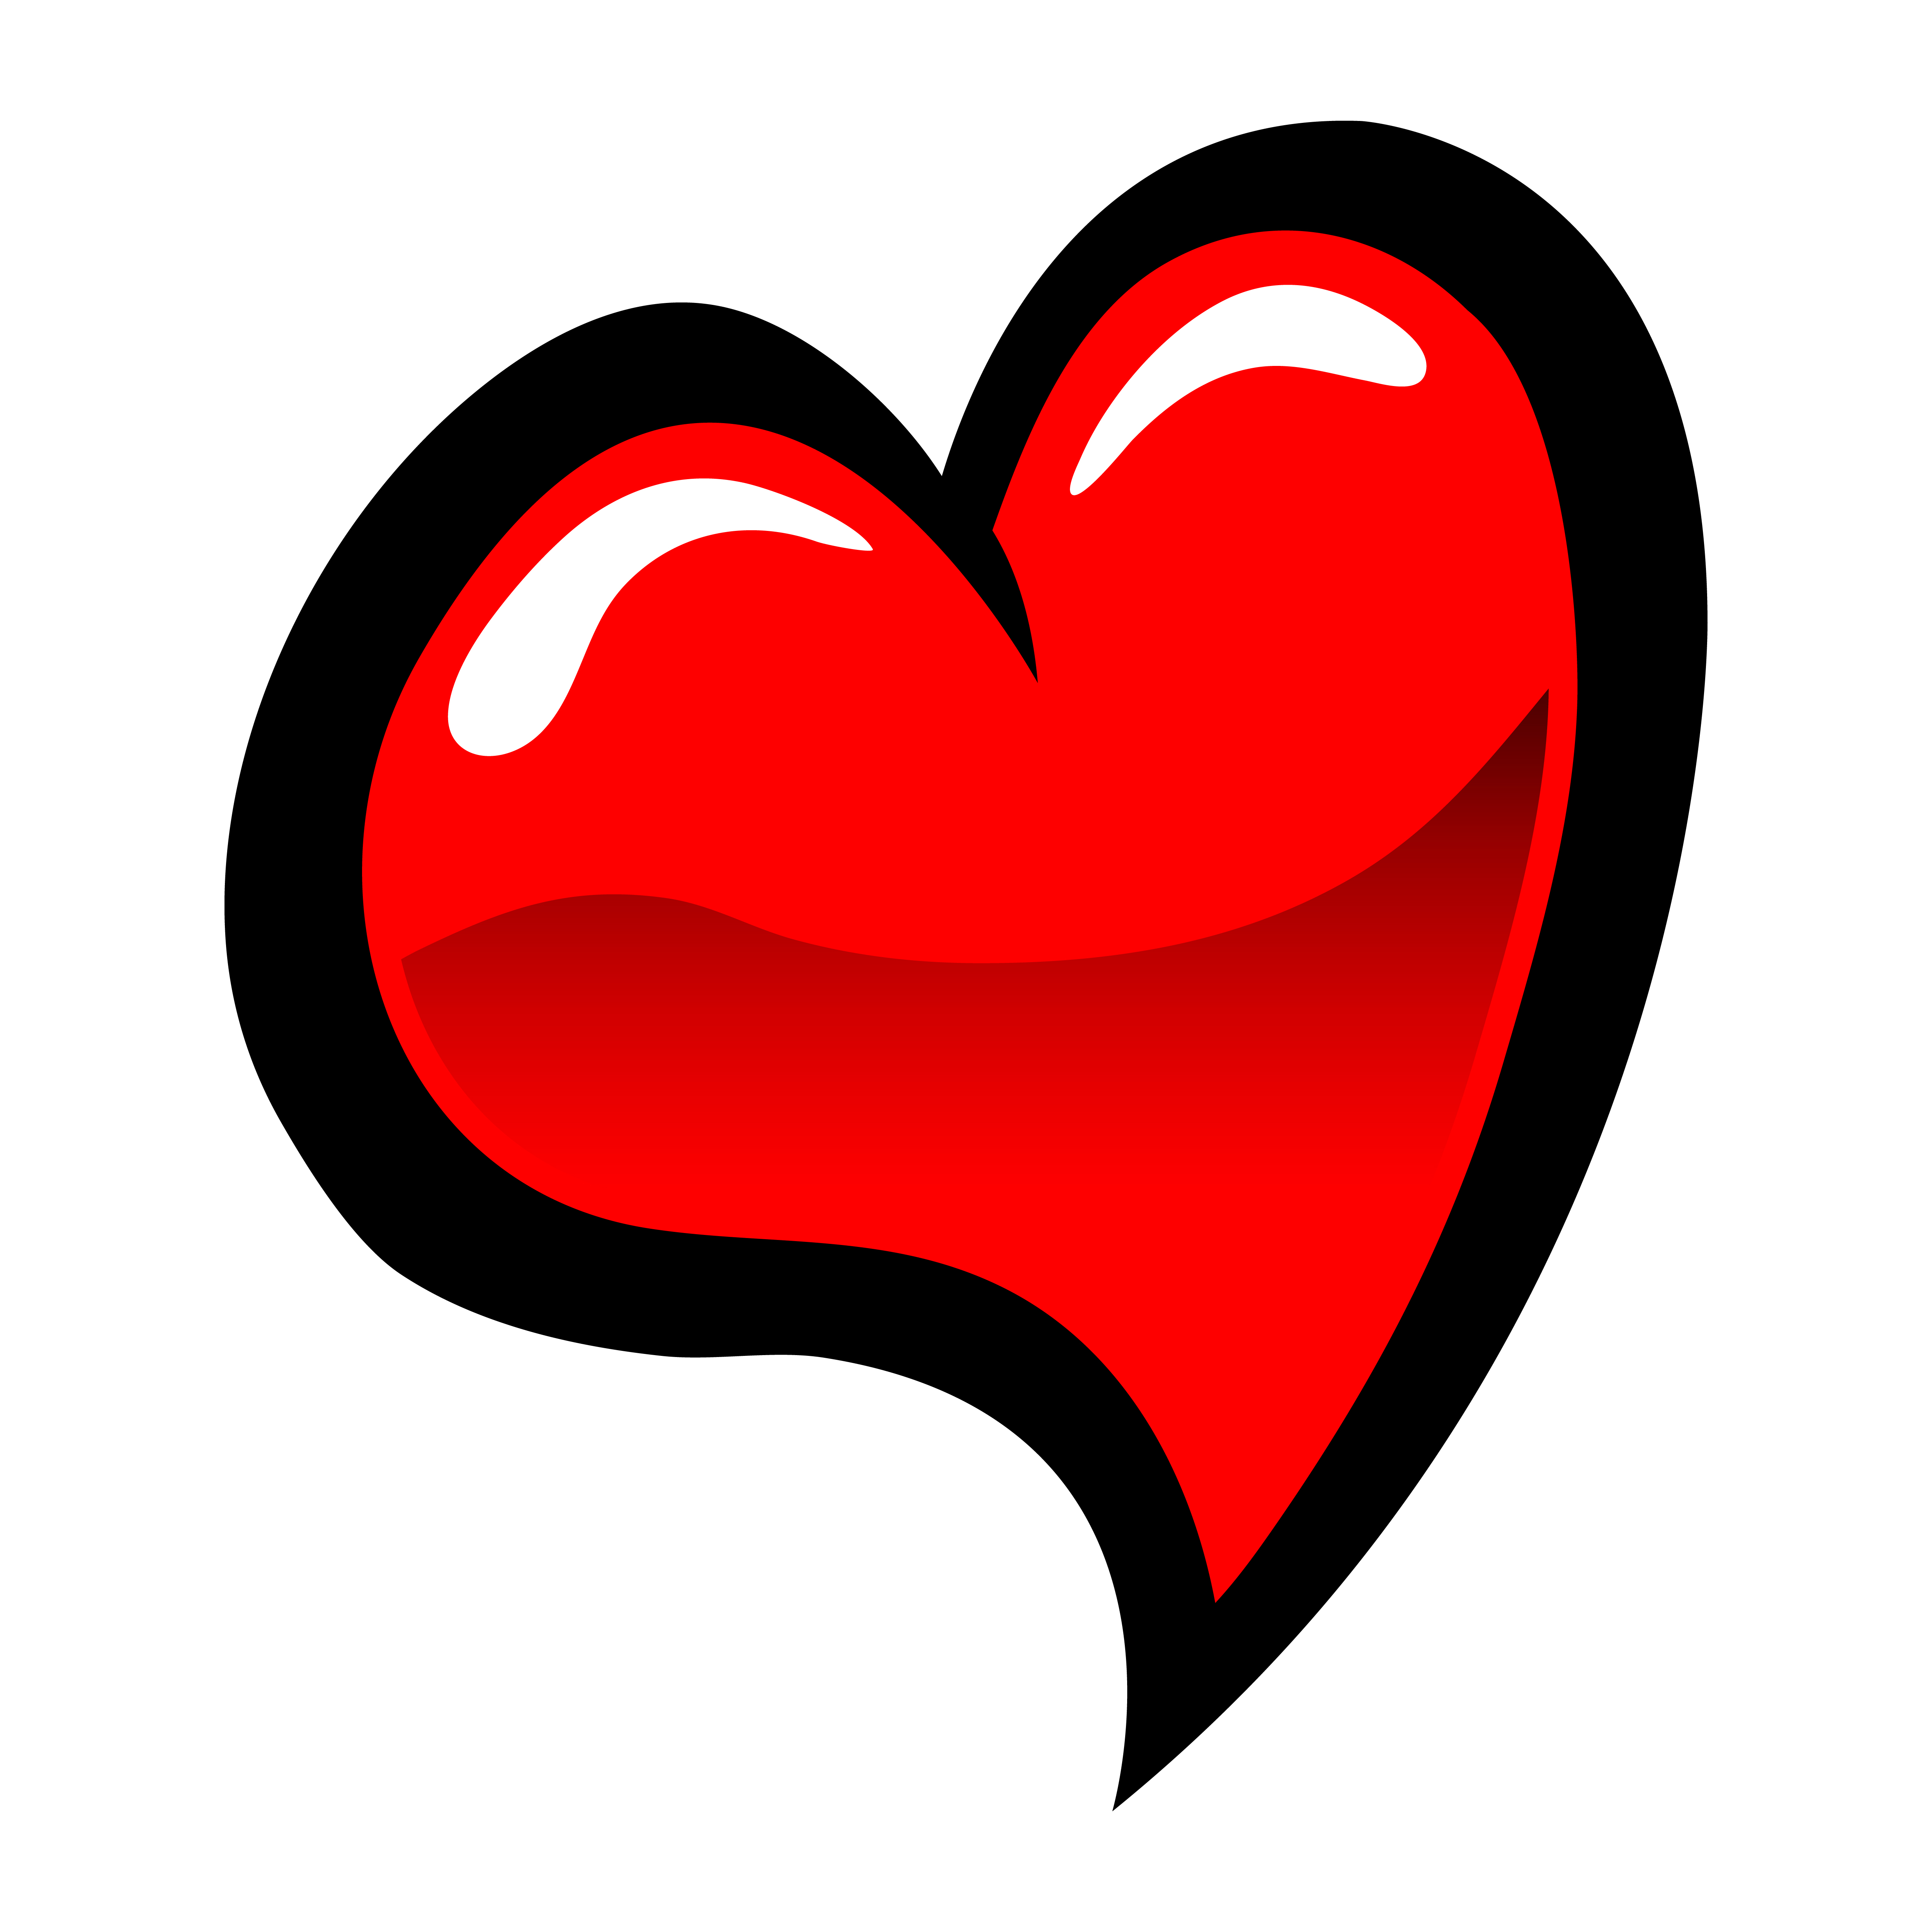 Heart Romantic Love graphic 551853 Download Free Vectors Clipart Graphics & Vector Art